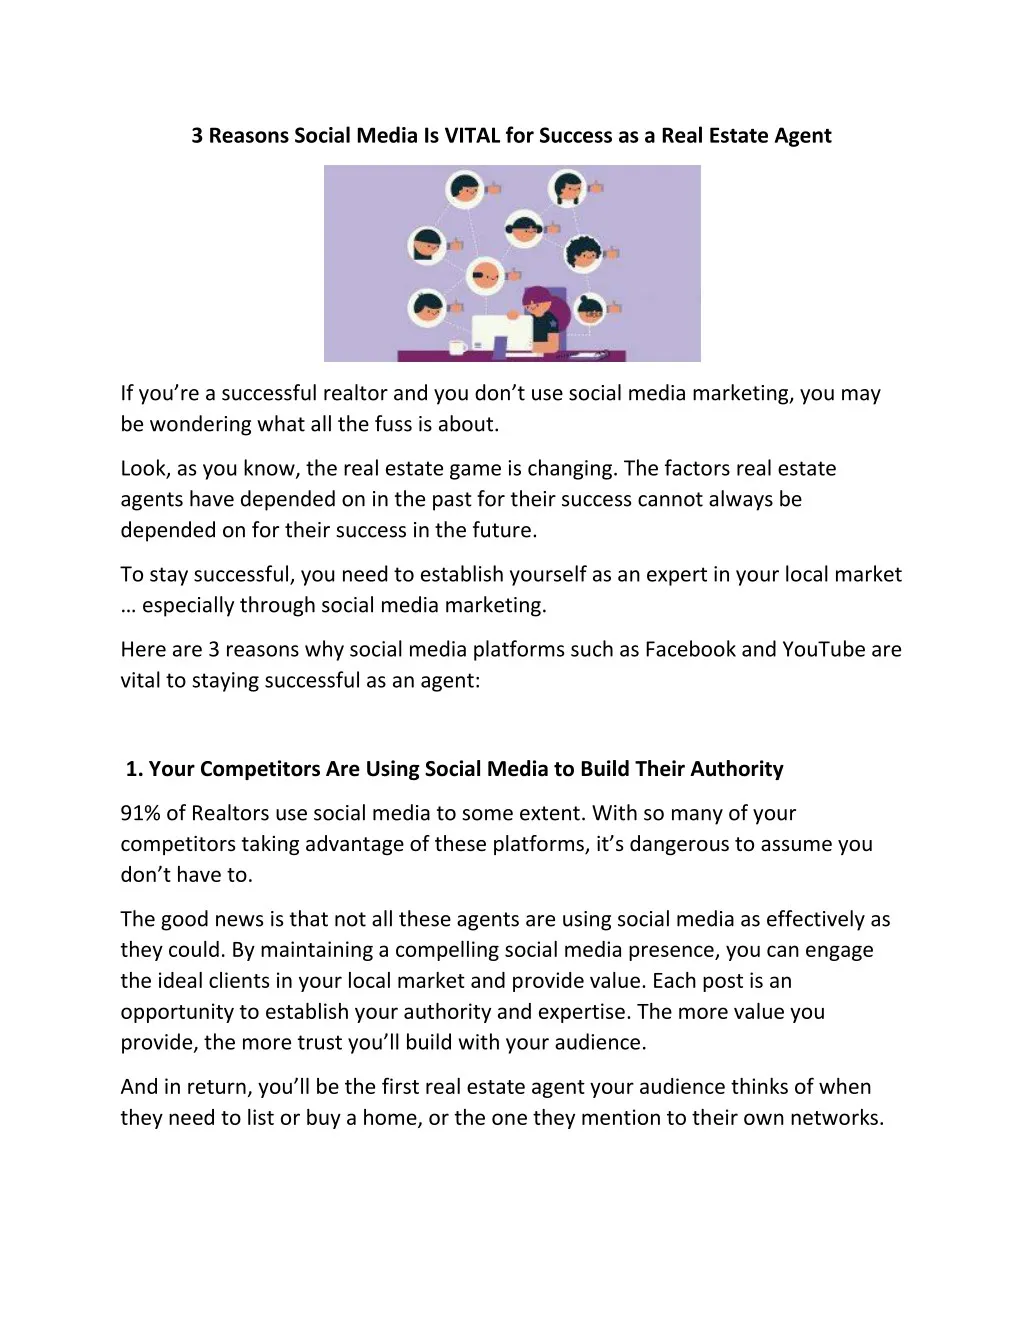 3 reasons social media is vital for success